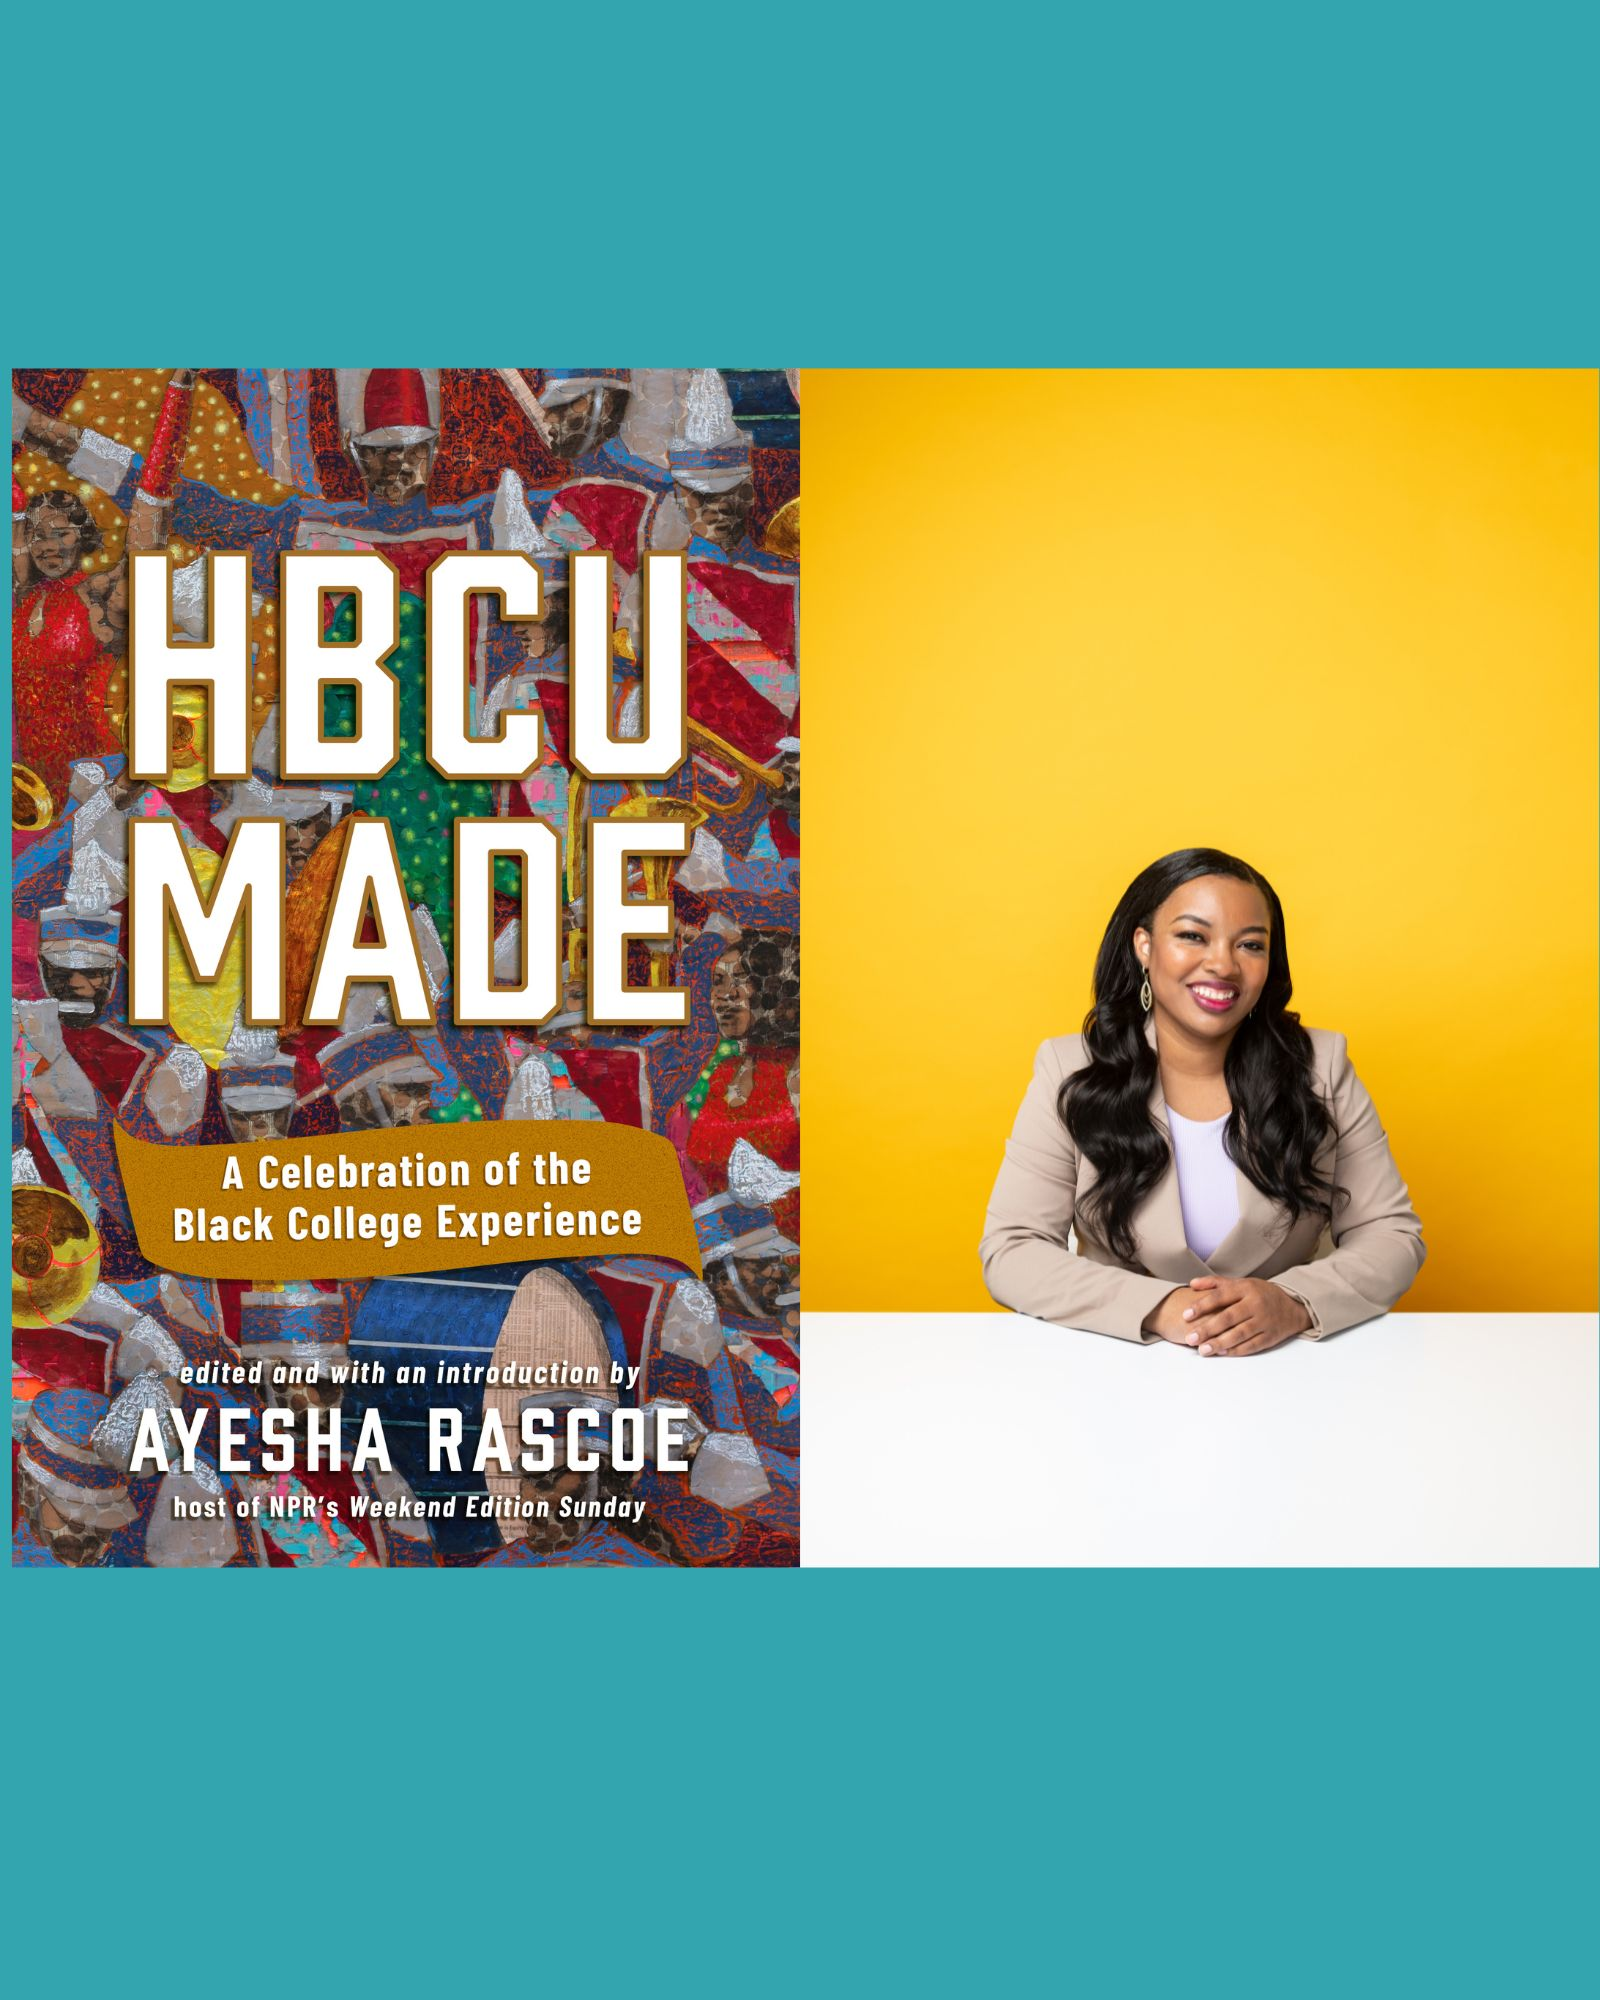 NPR's Ayesha Rascoe spotlights Black colleges in "HBCU Made"